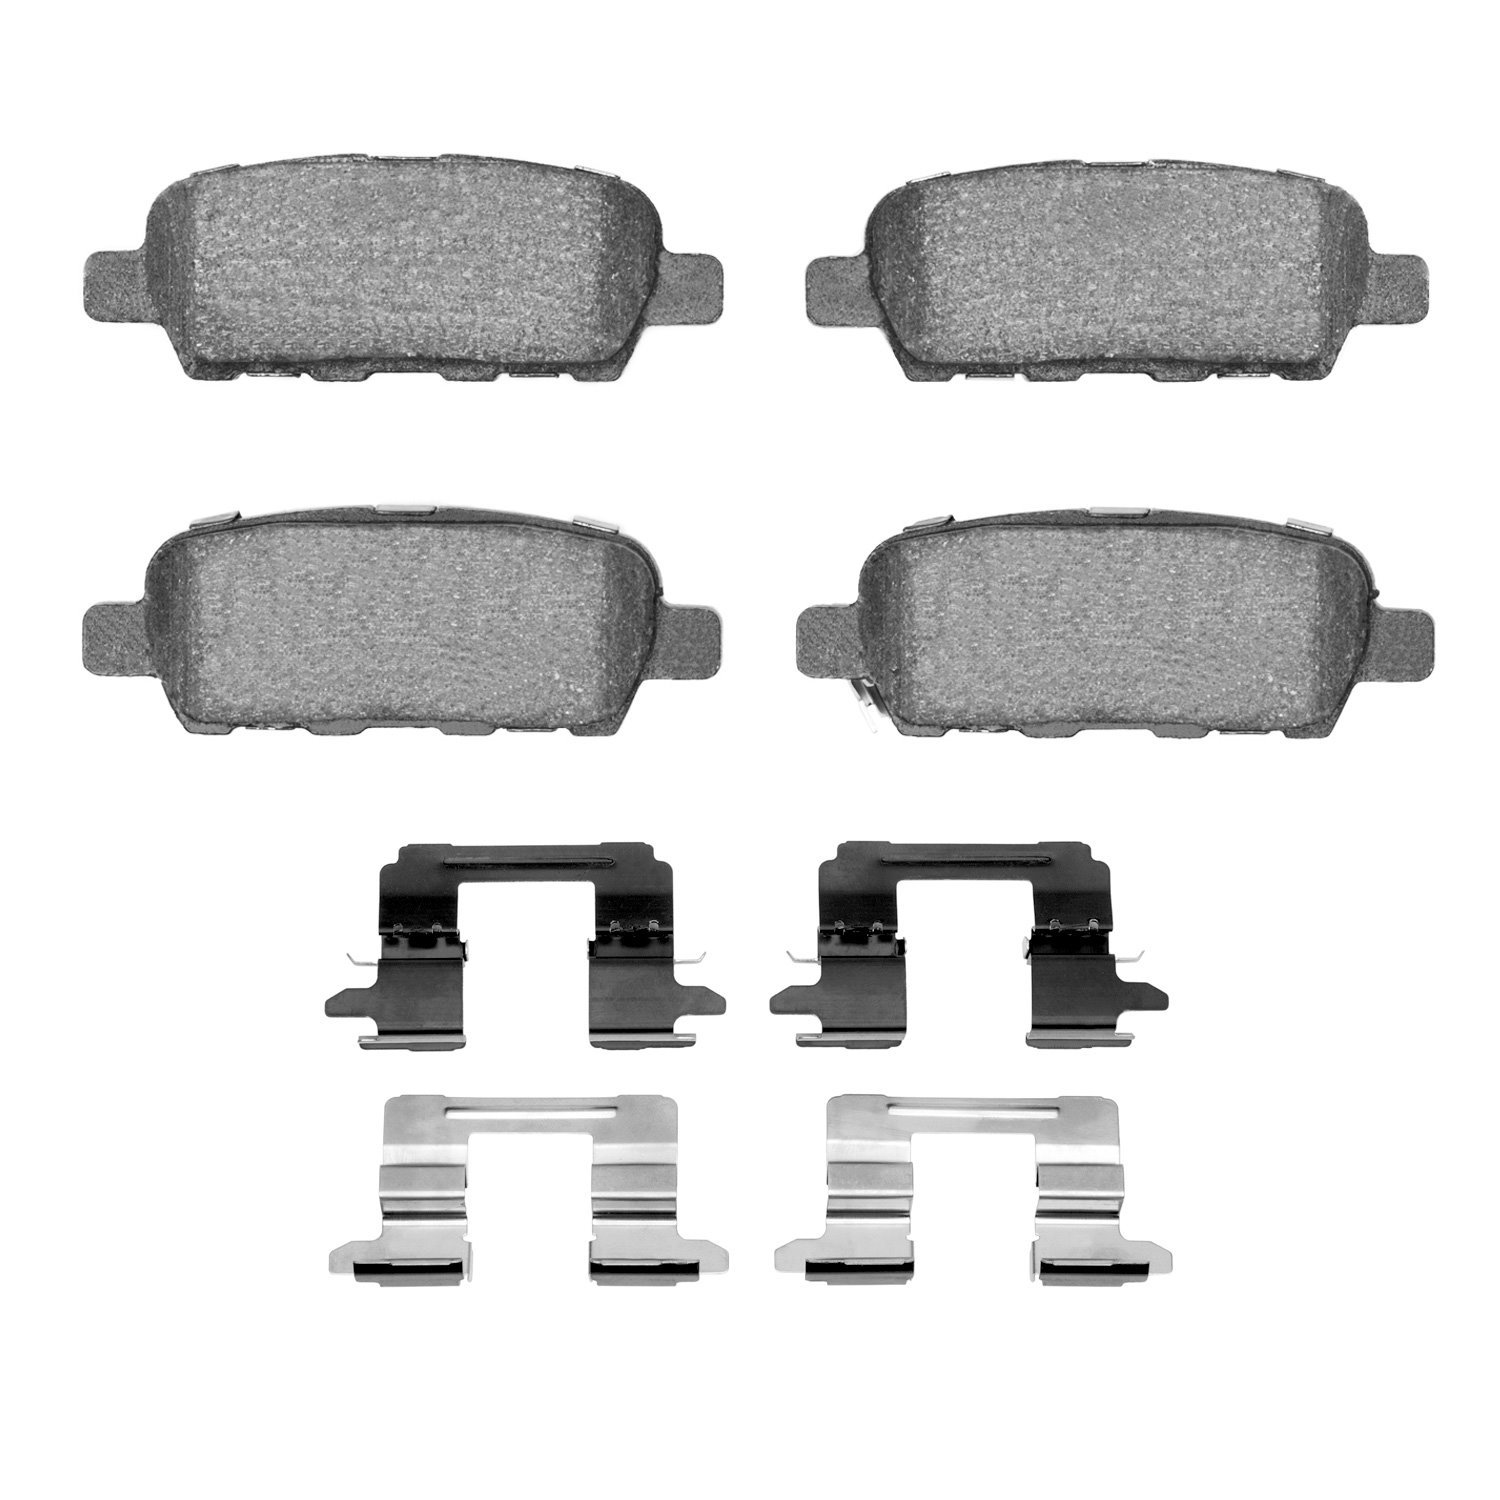 1115-0905-03 Active Performance Brake Pads & Hardware Kit, Fits Select Multiple Makes/Models, Position: Rear